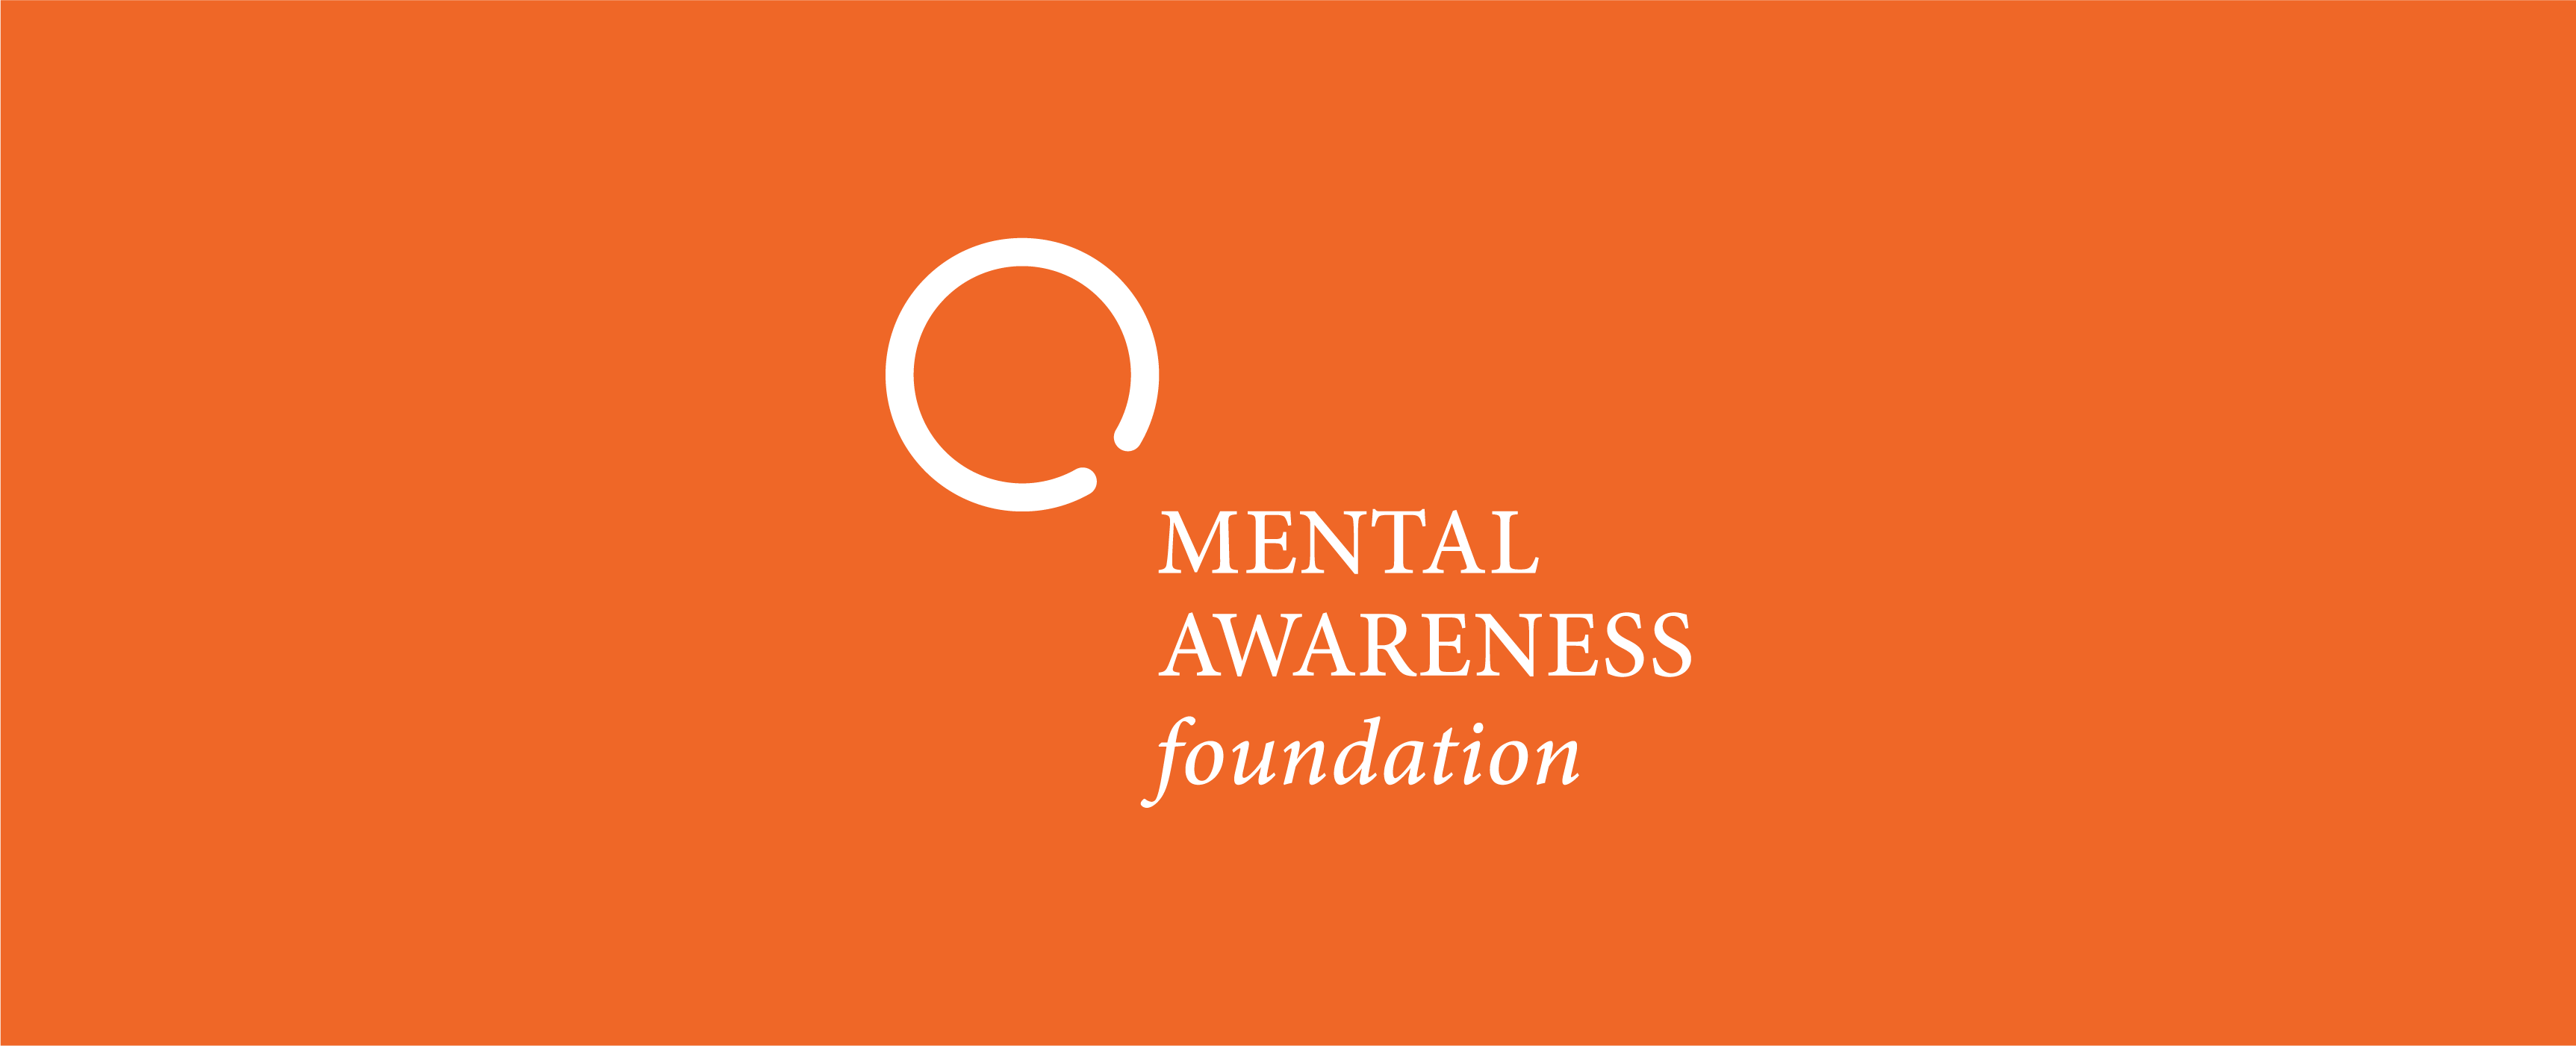 Mental Awareness Foundation